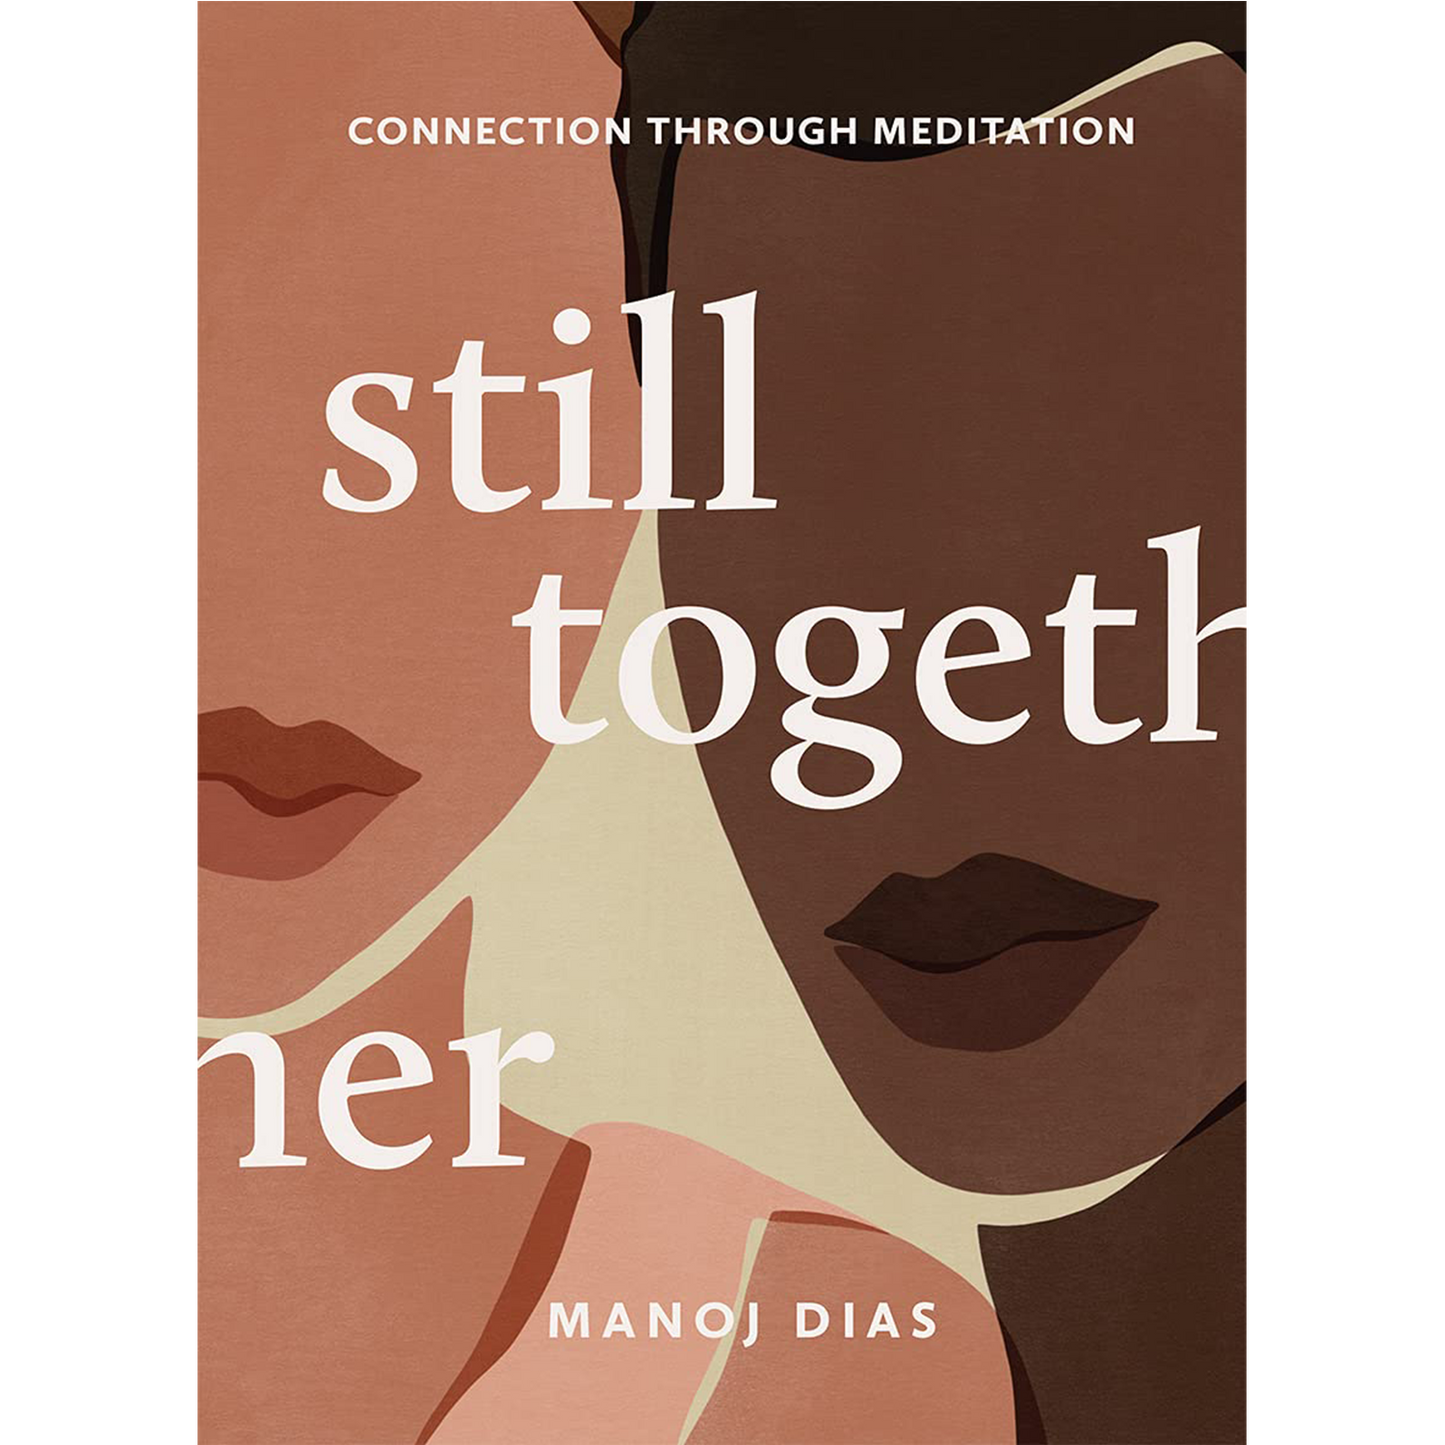 Still Together: Connection Through Meditation by Manoj Dias